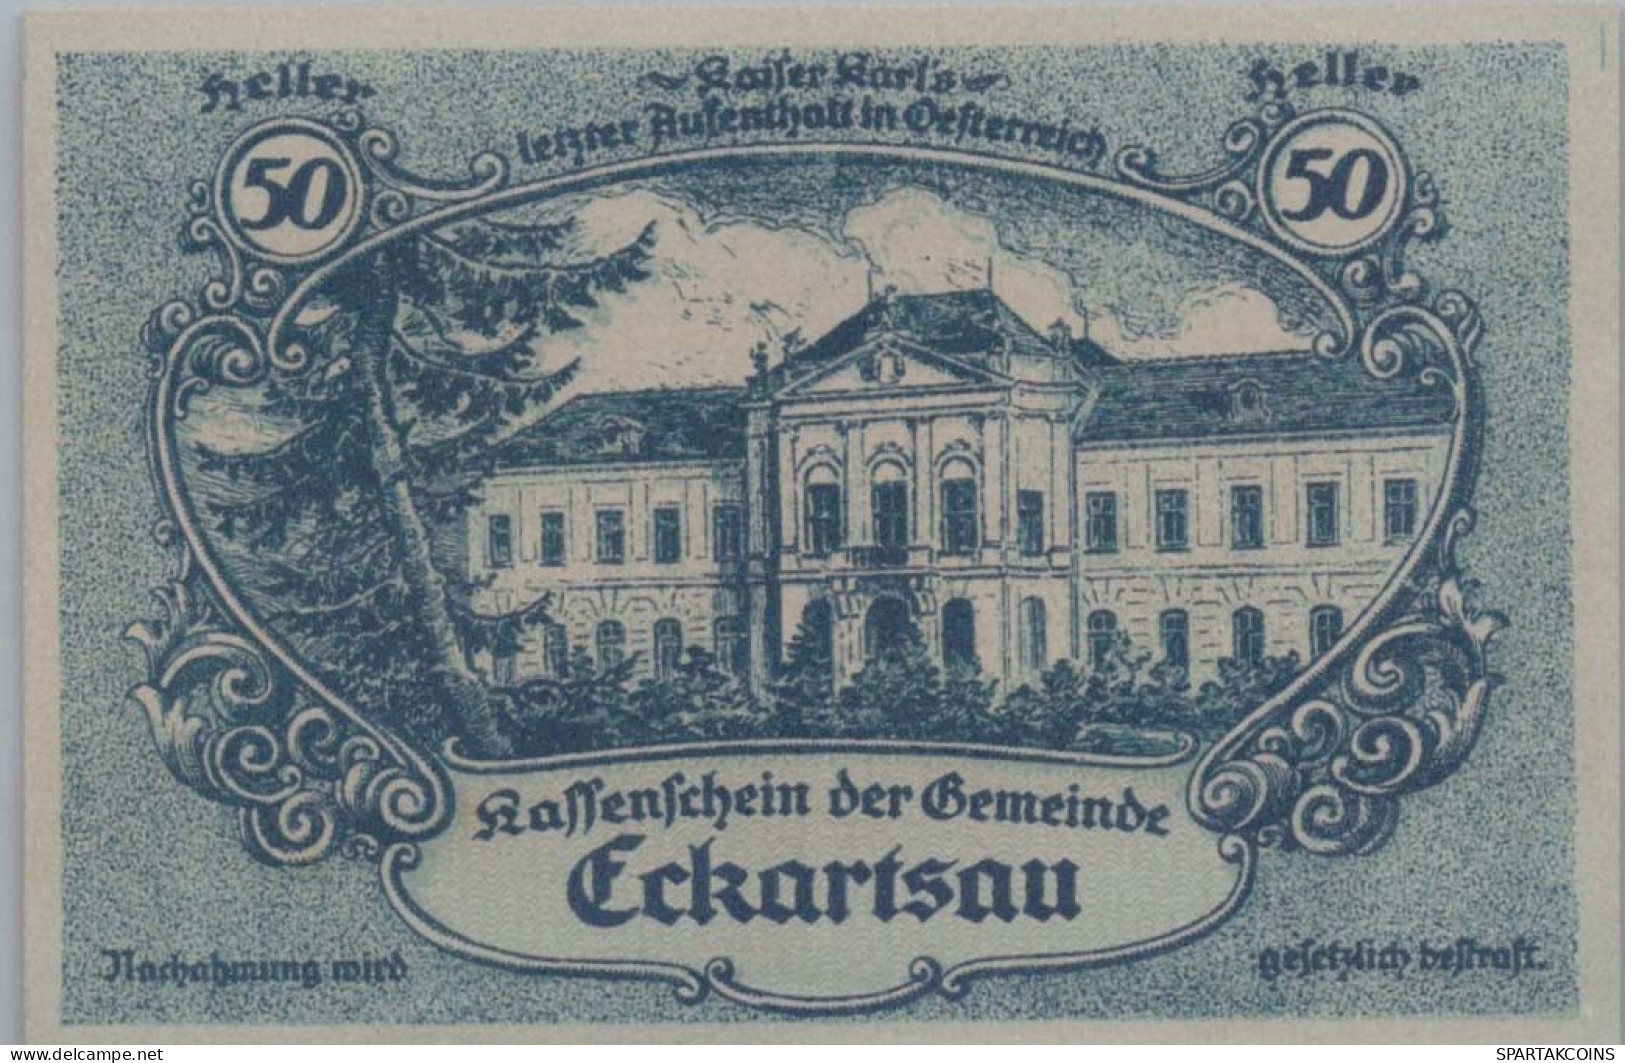 50 HELLER 1920 Stadt ECKARTSAU Niedrigeren Österreich Notgeld Banknote #PE950 - [11] Local Banknote Issues